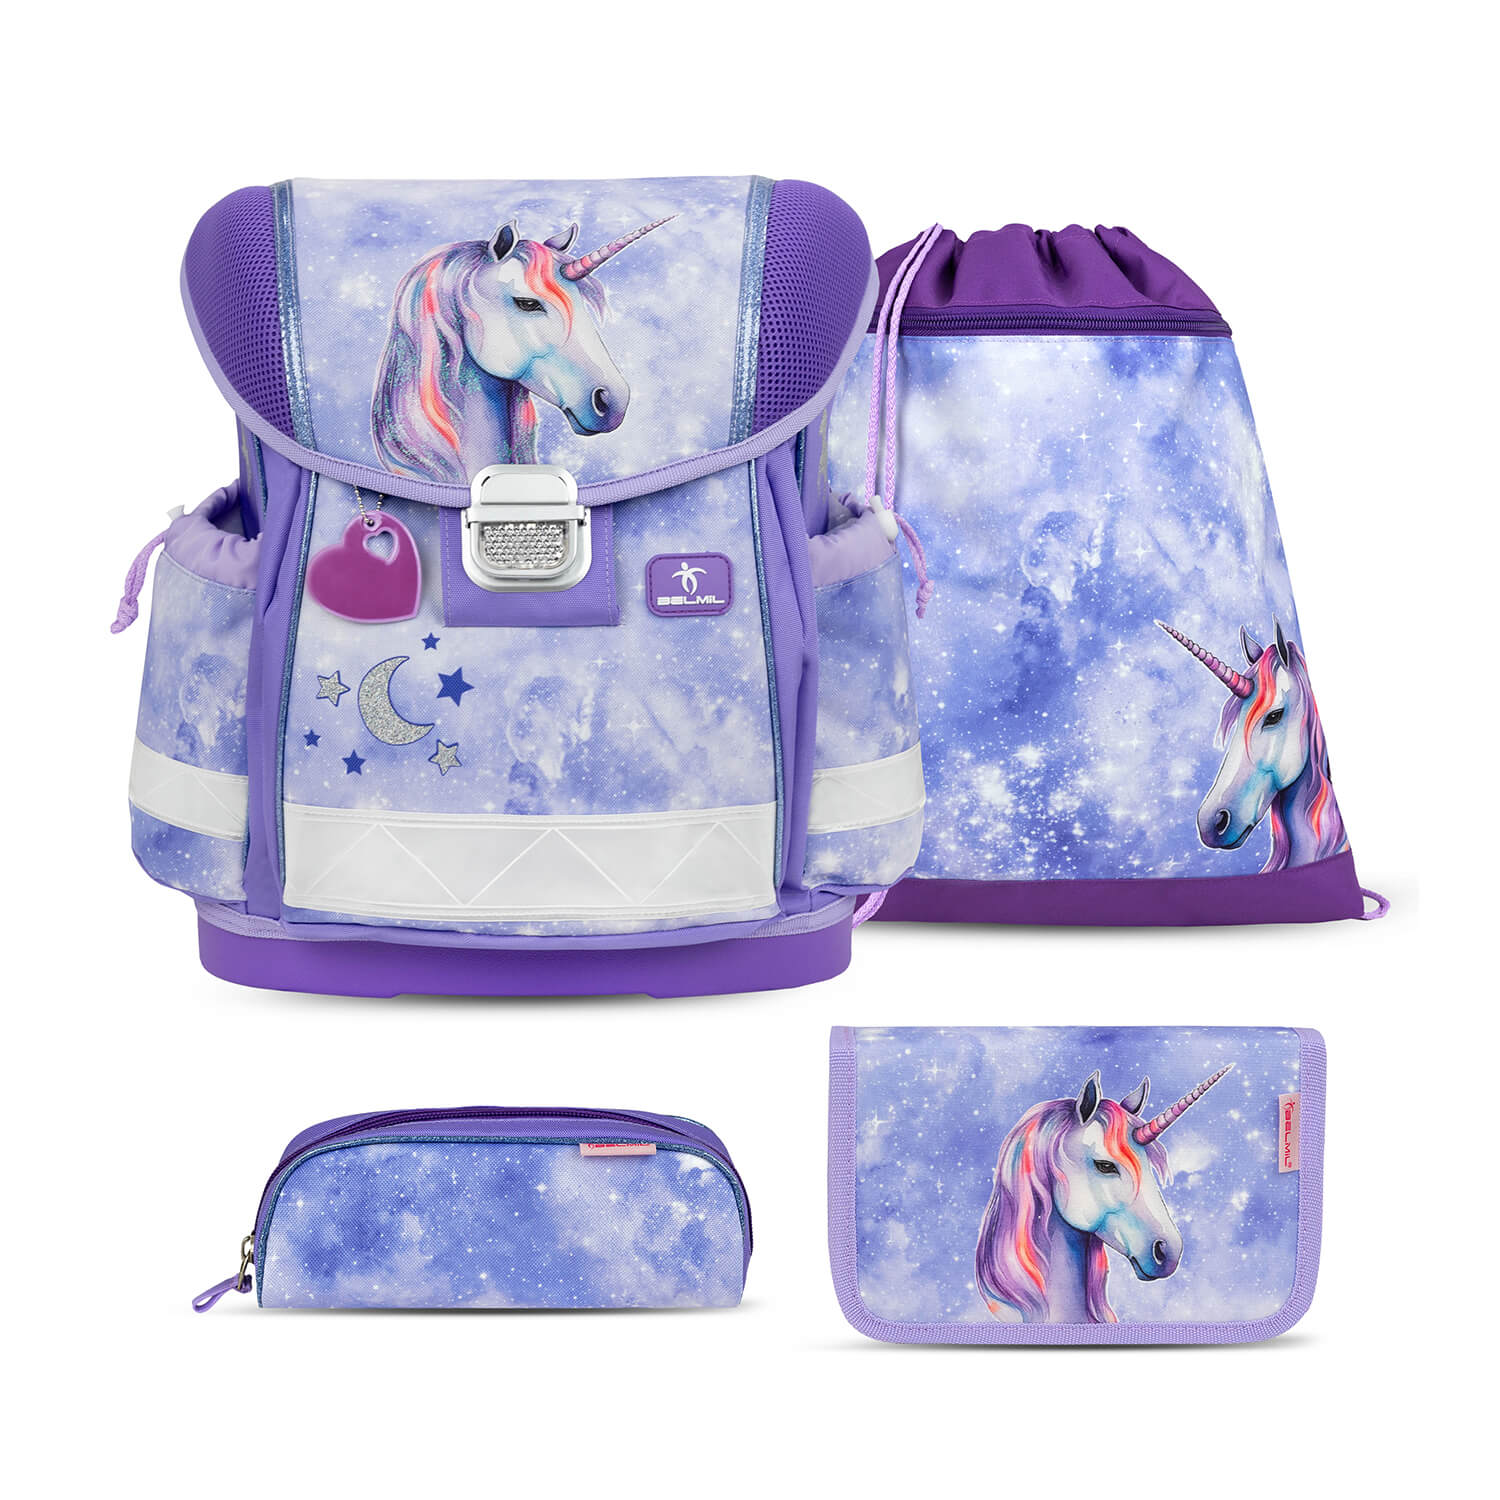 Classy Mistyc Luna schoolbag set 4 pcs